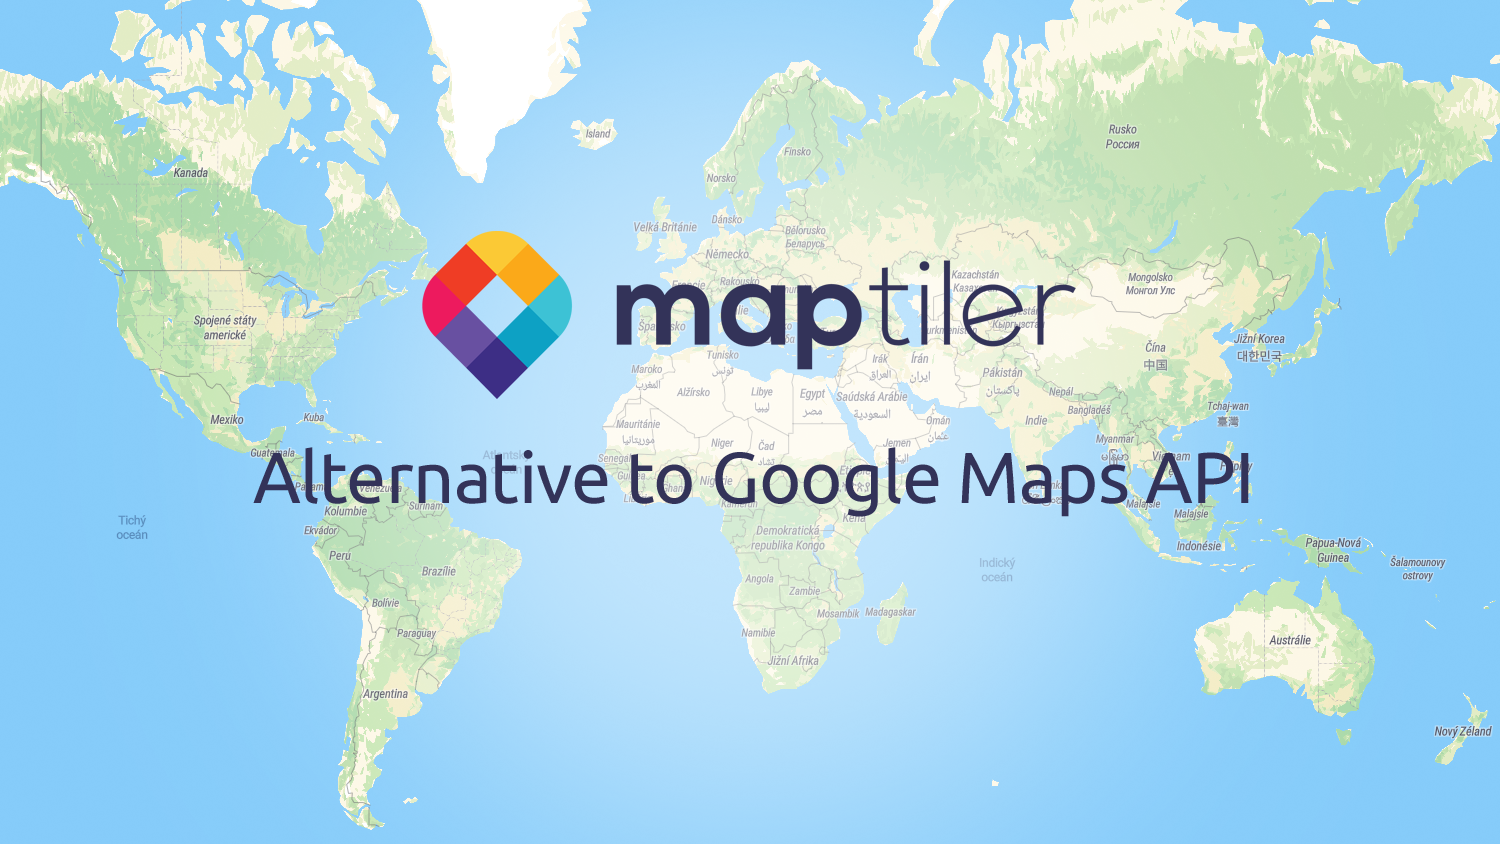 Google Maps API alternative image